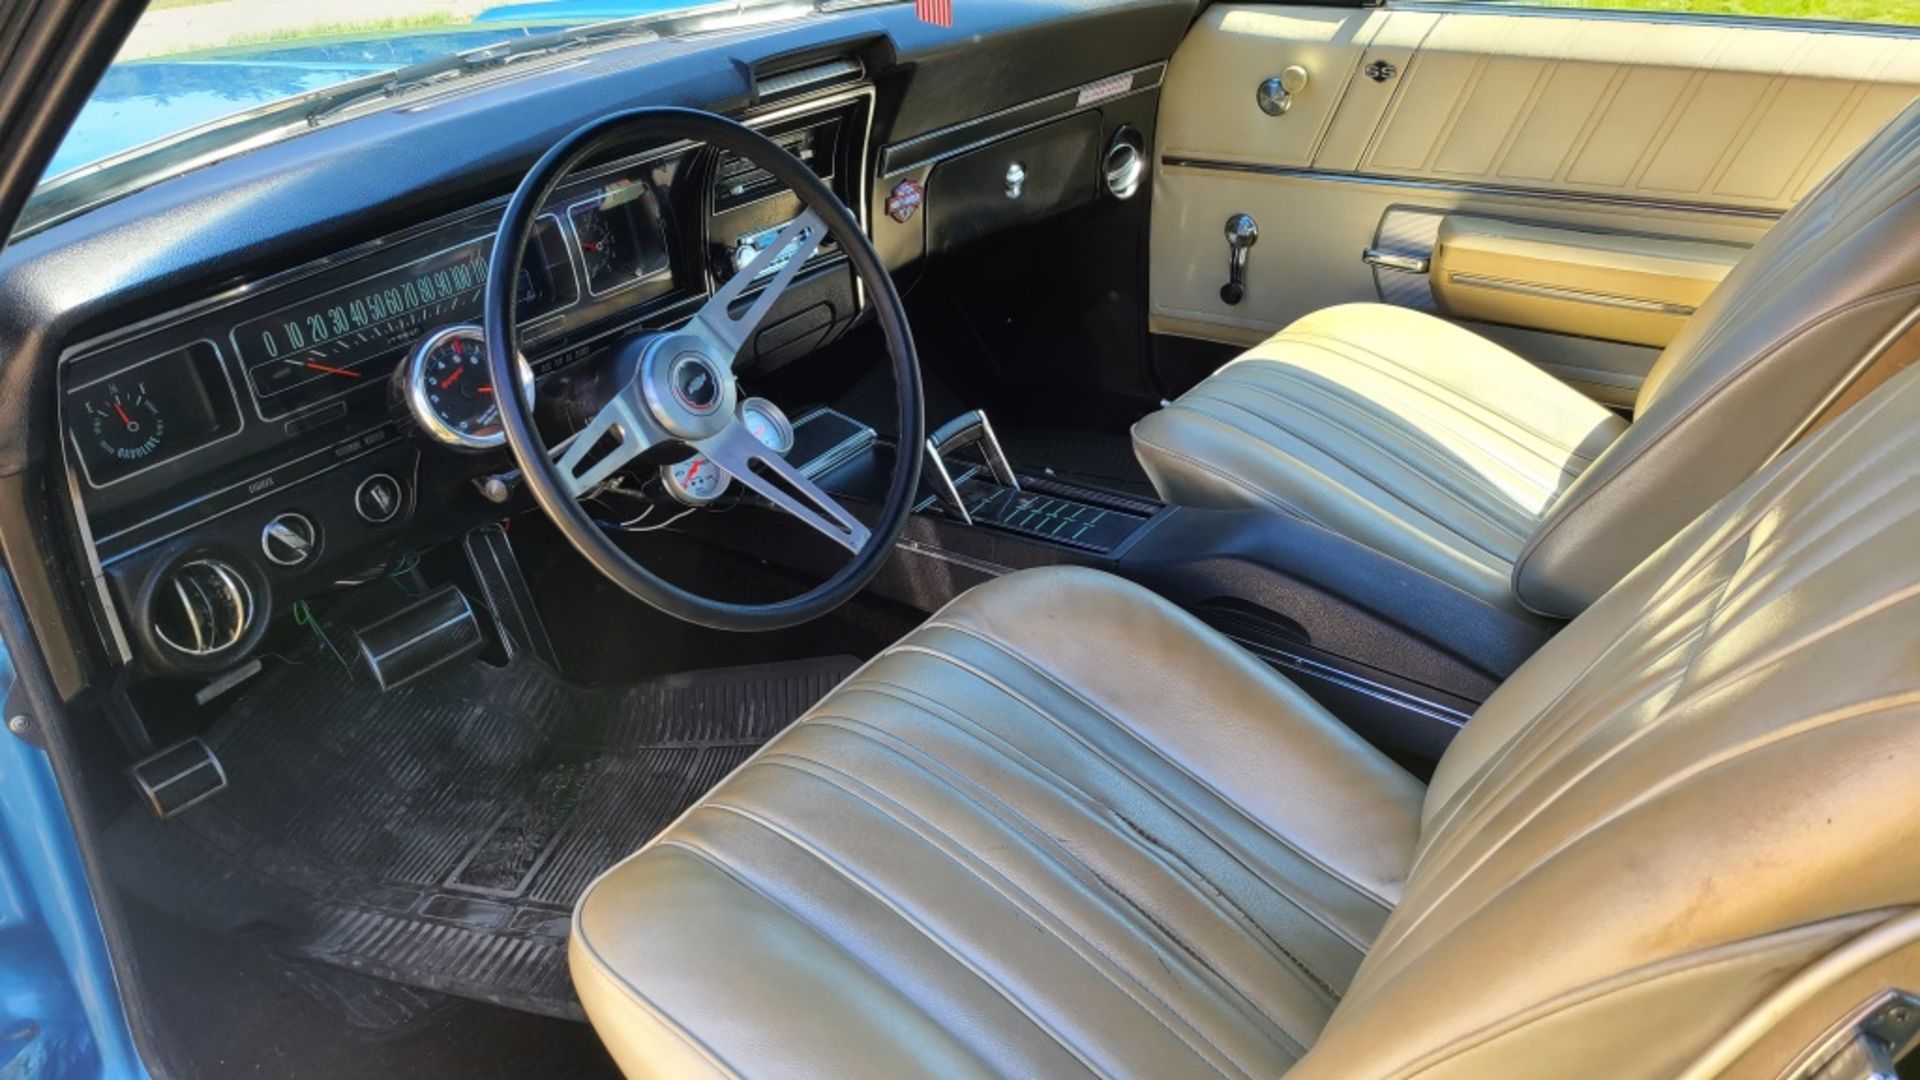 1968 Chevy Impala Ss - Image 10 of 15